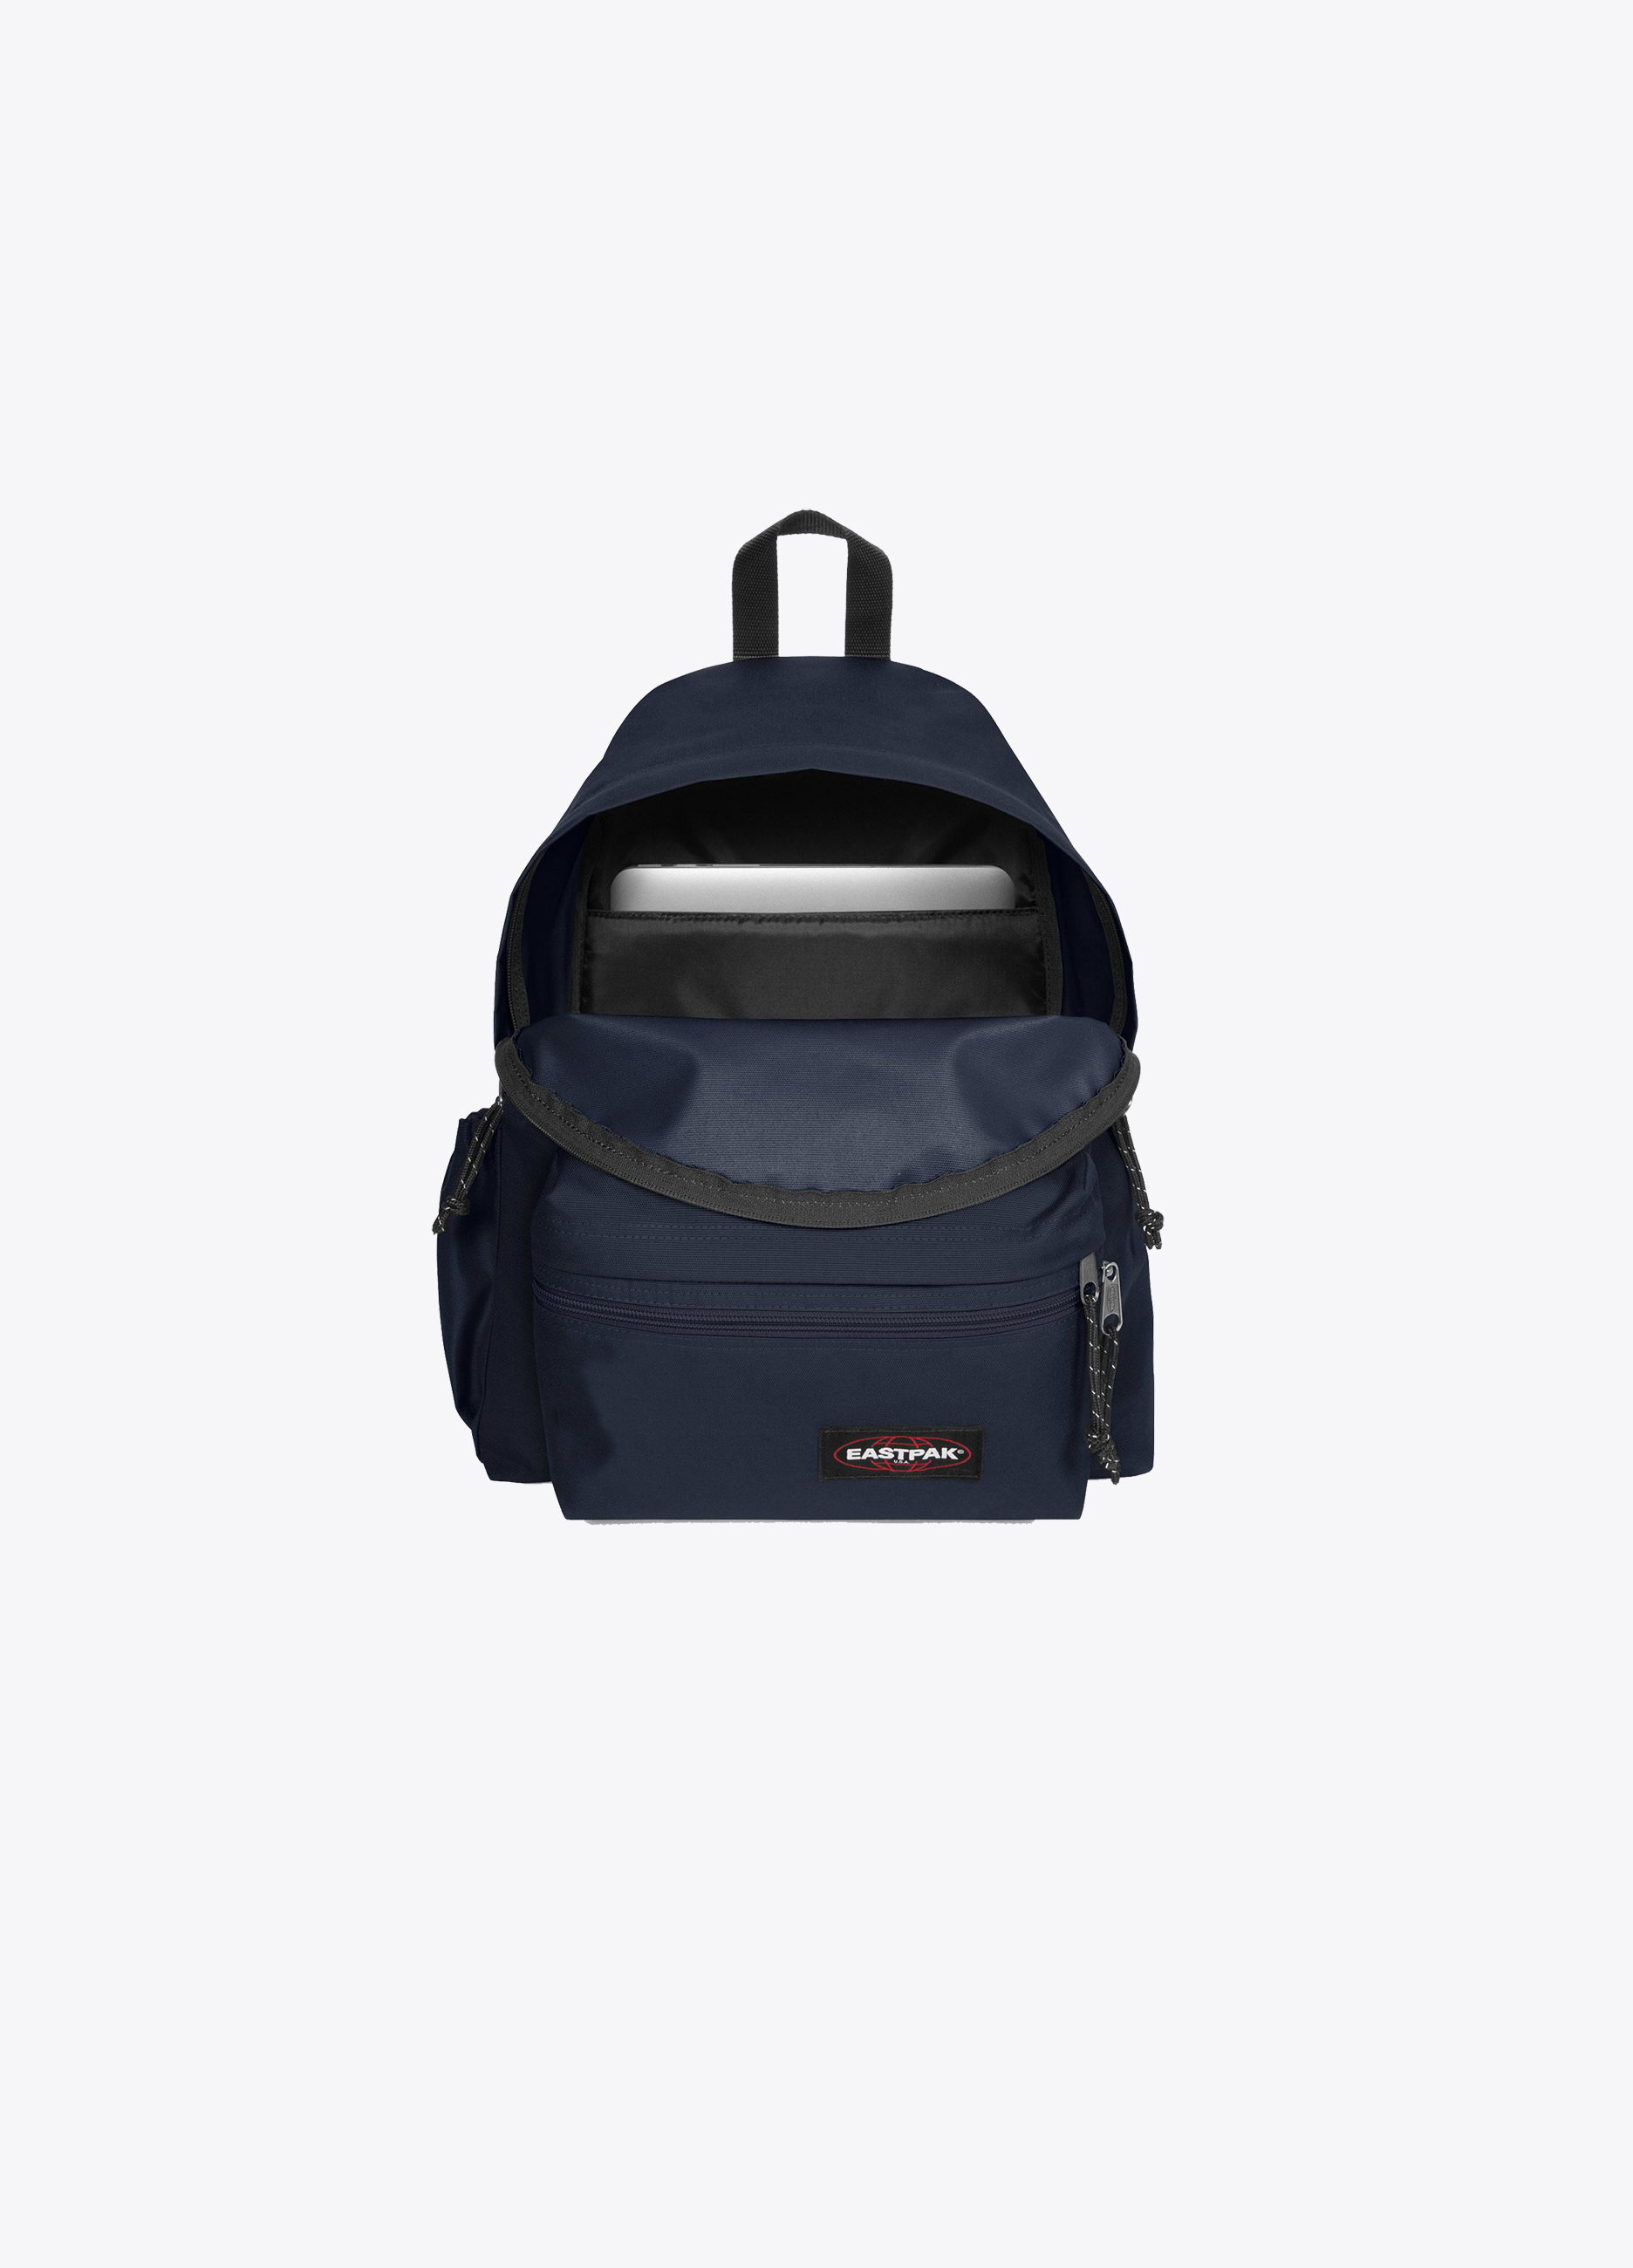 UNISEX - Eastpak big backpack with patch - 24 lt.